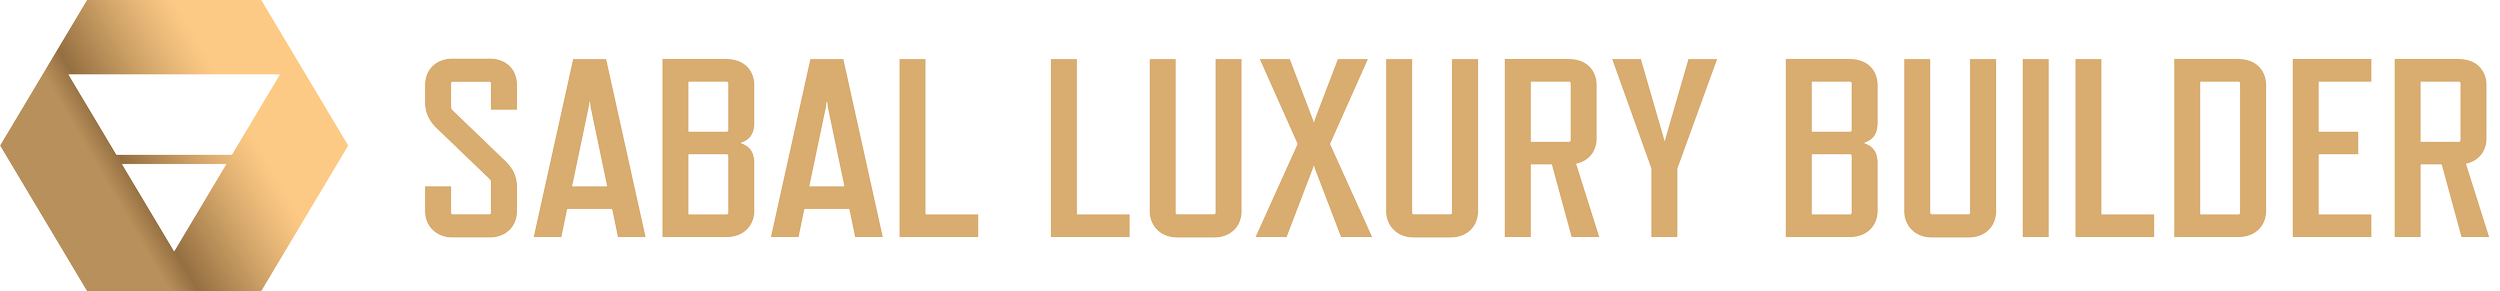 sabal luxury builder logo 1.PNG